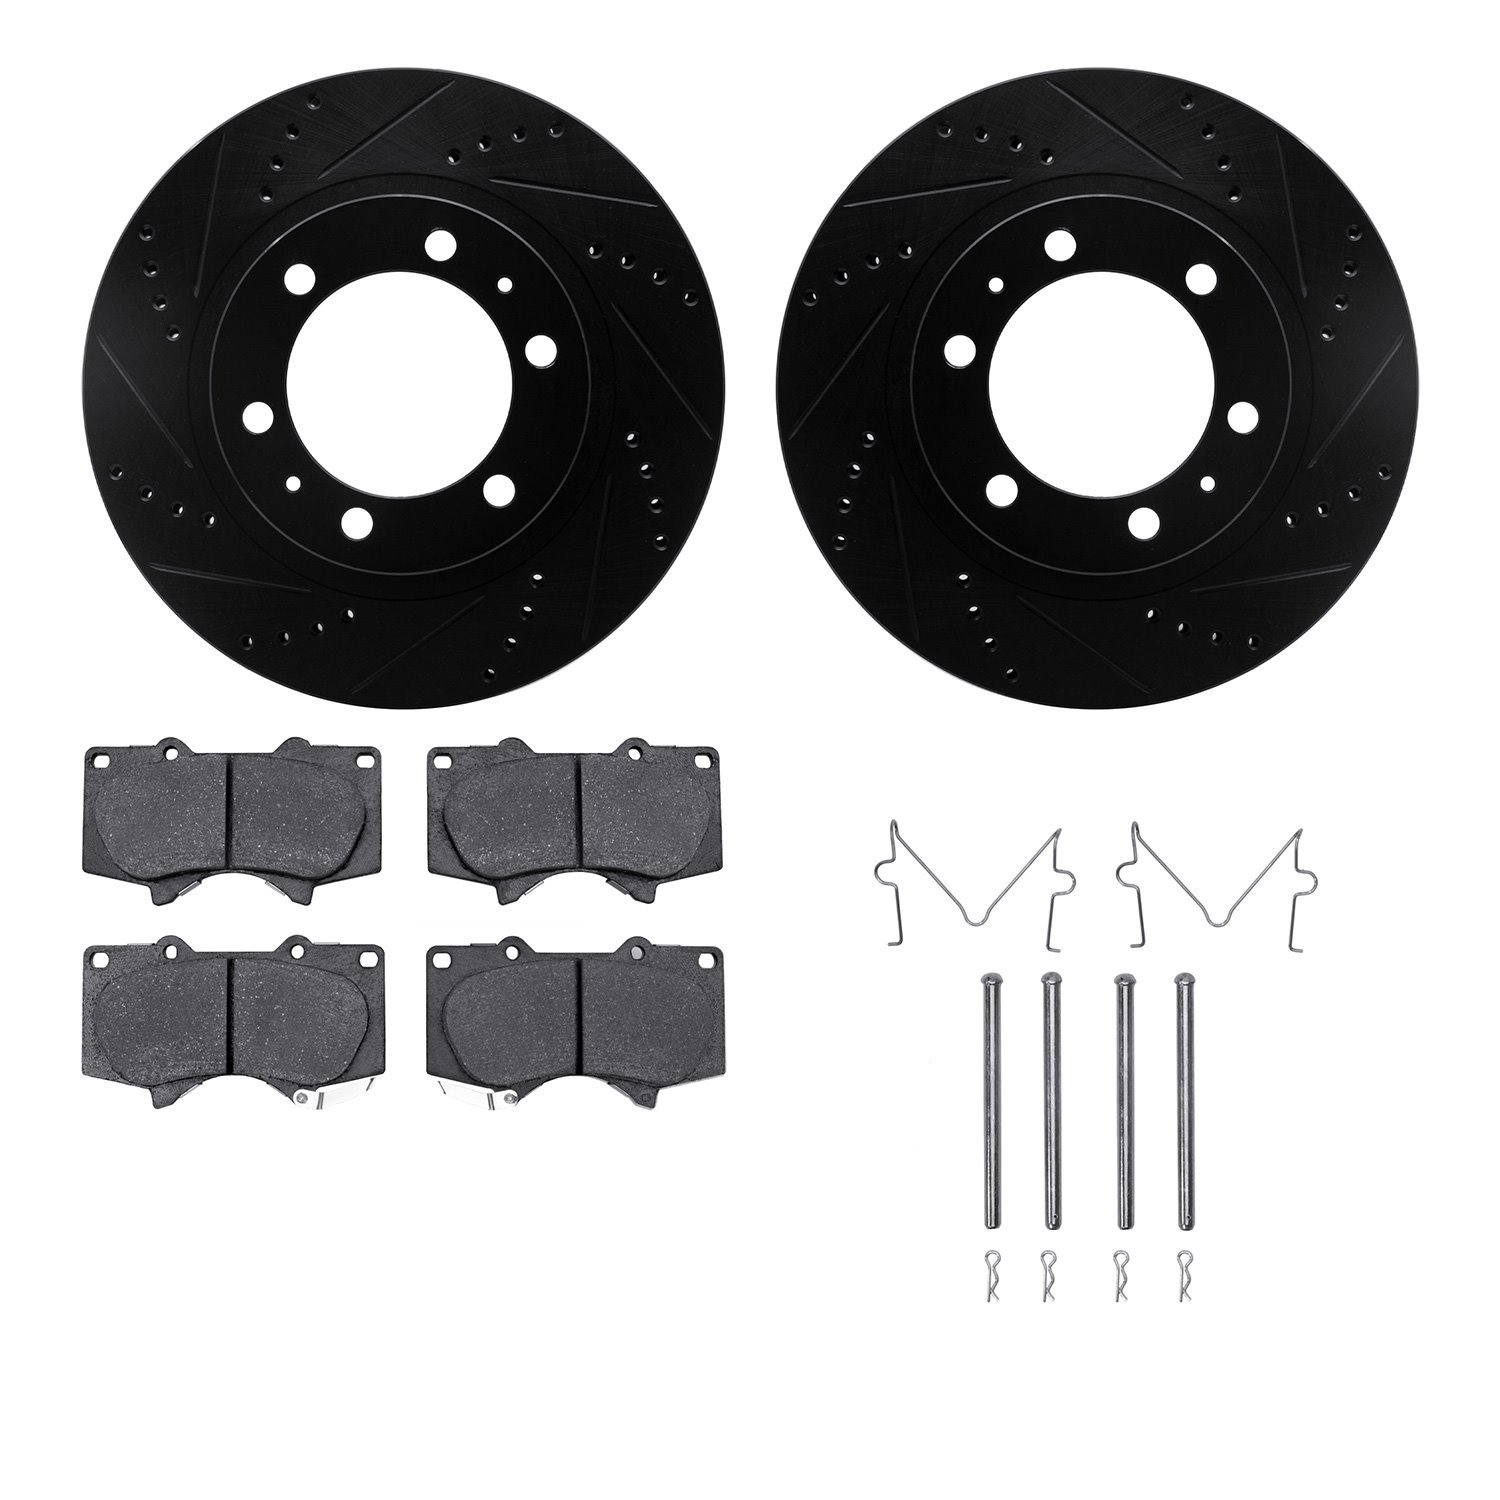 8312-76147 Drilled/Slotted Brake Rotors with 3000-Series Ceramic Brake Pads Kit & Hardware [Black], Fits Select Lexus/Toyota/Sci